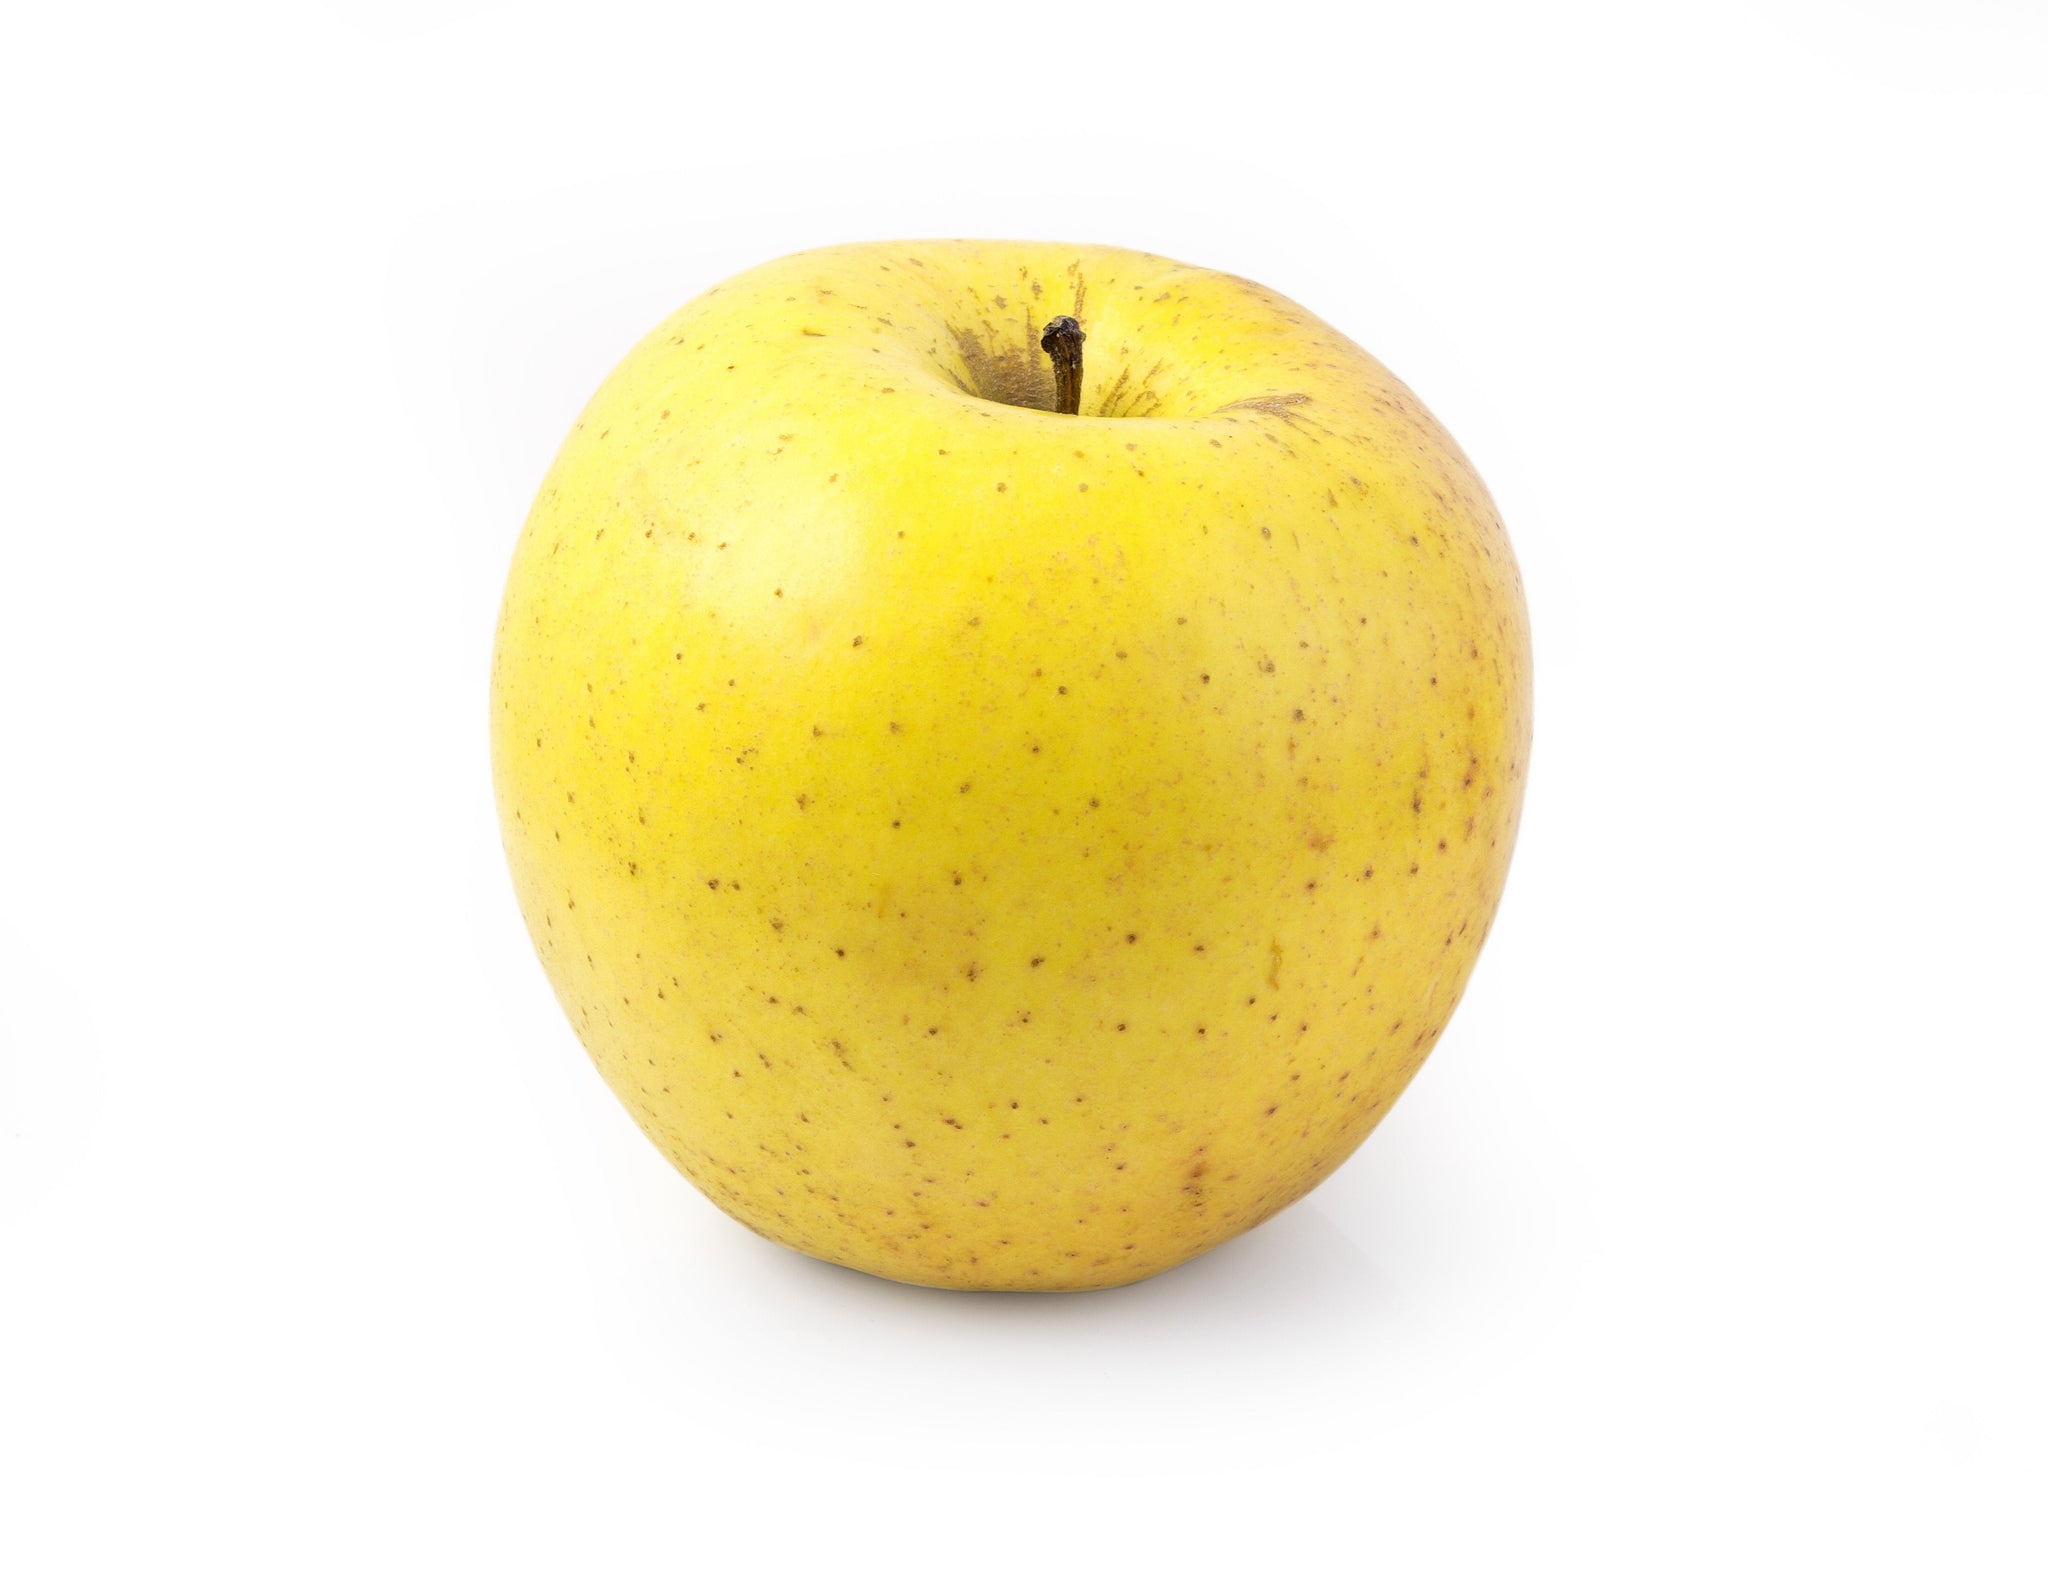 aba>Apples Golden, one